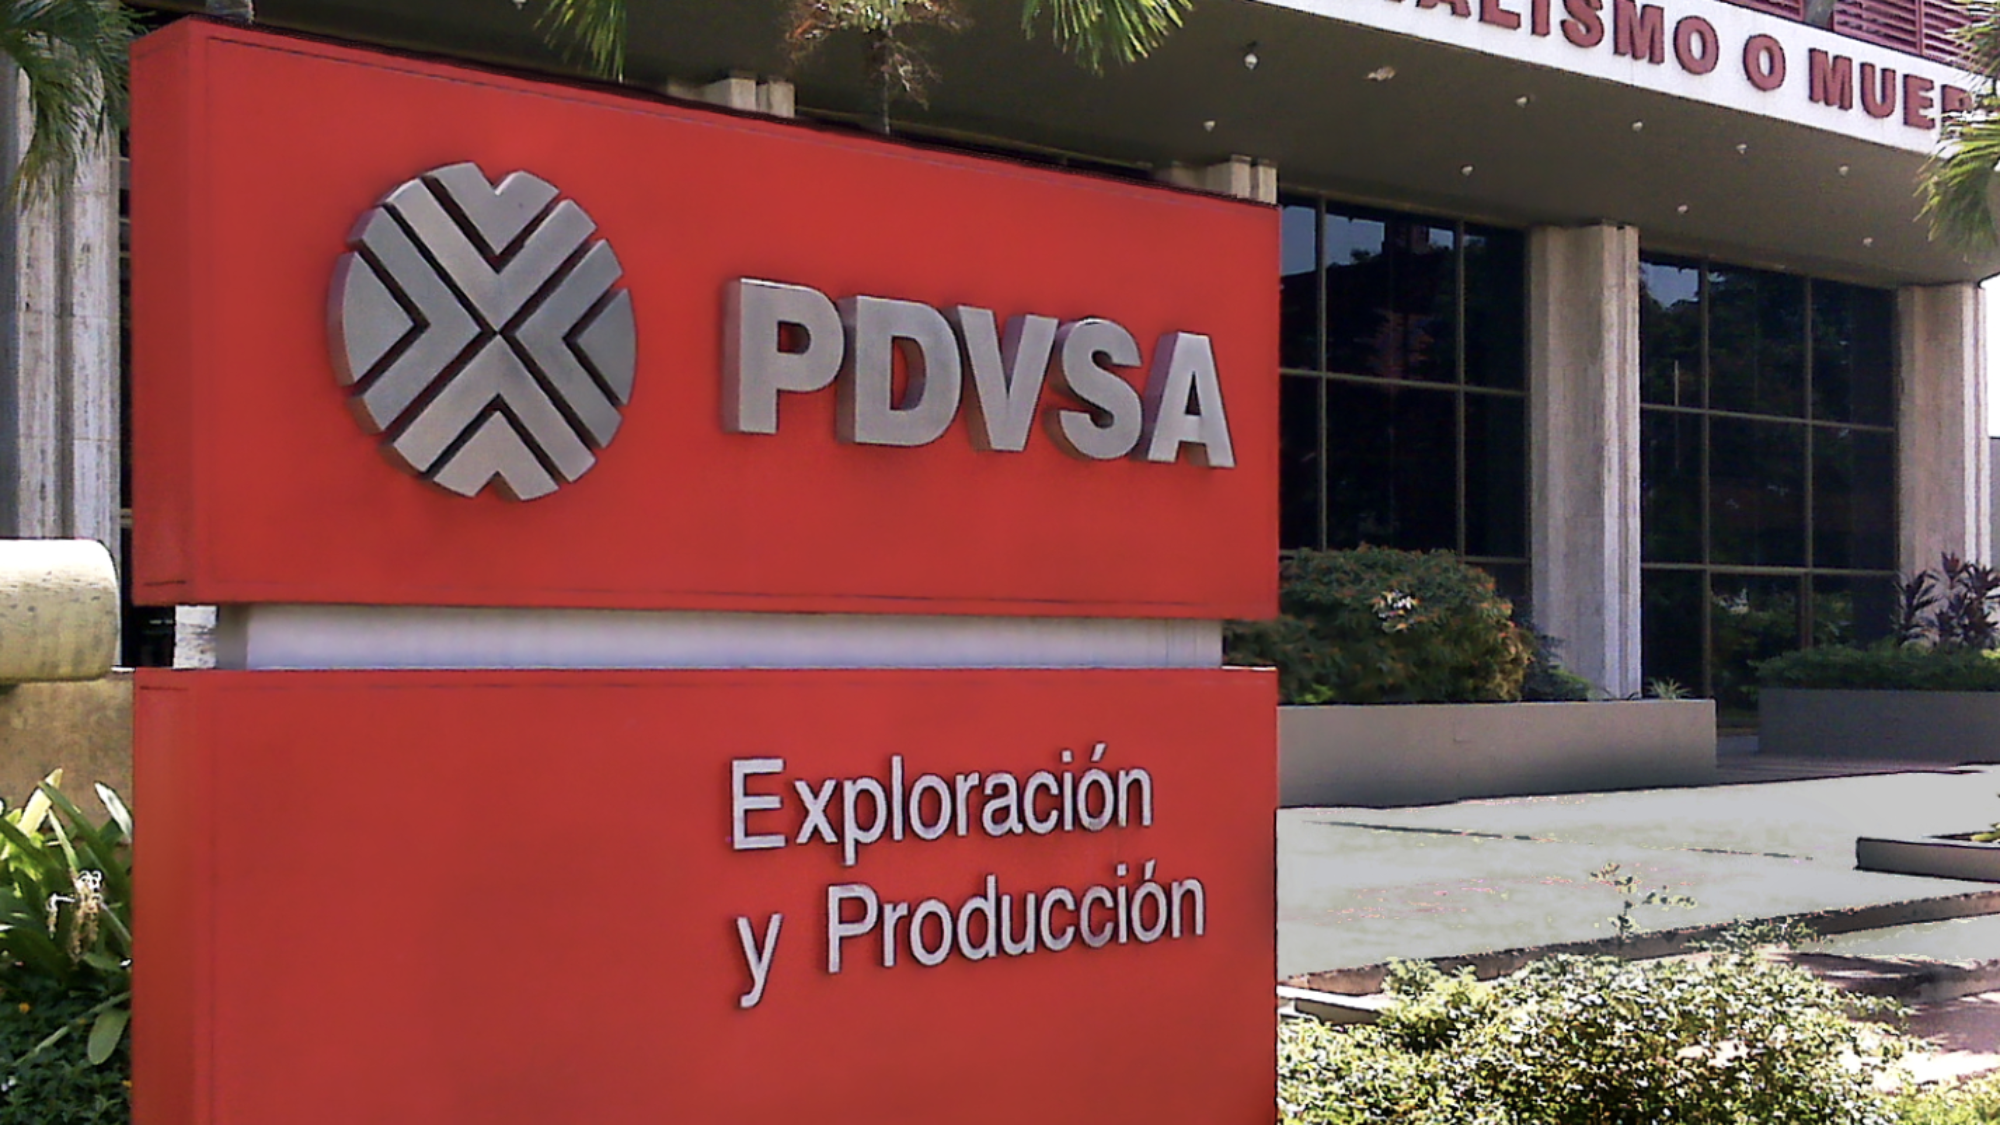 A red sign outside of a building says &quot;PDVSA: Exploracion y produccion.&quot;